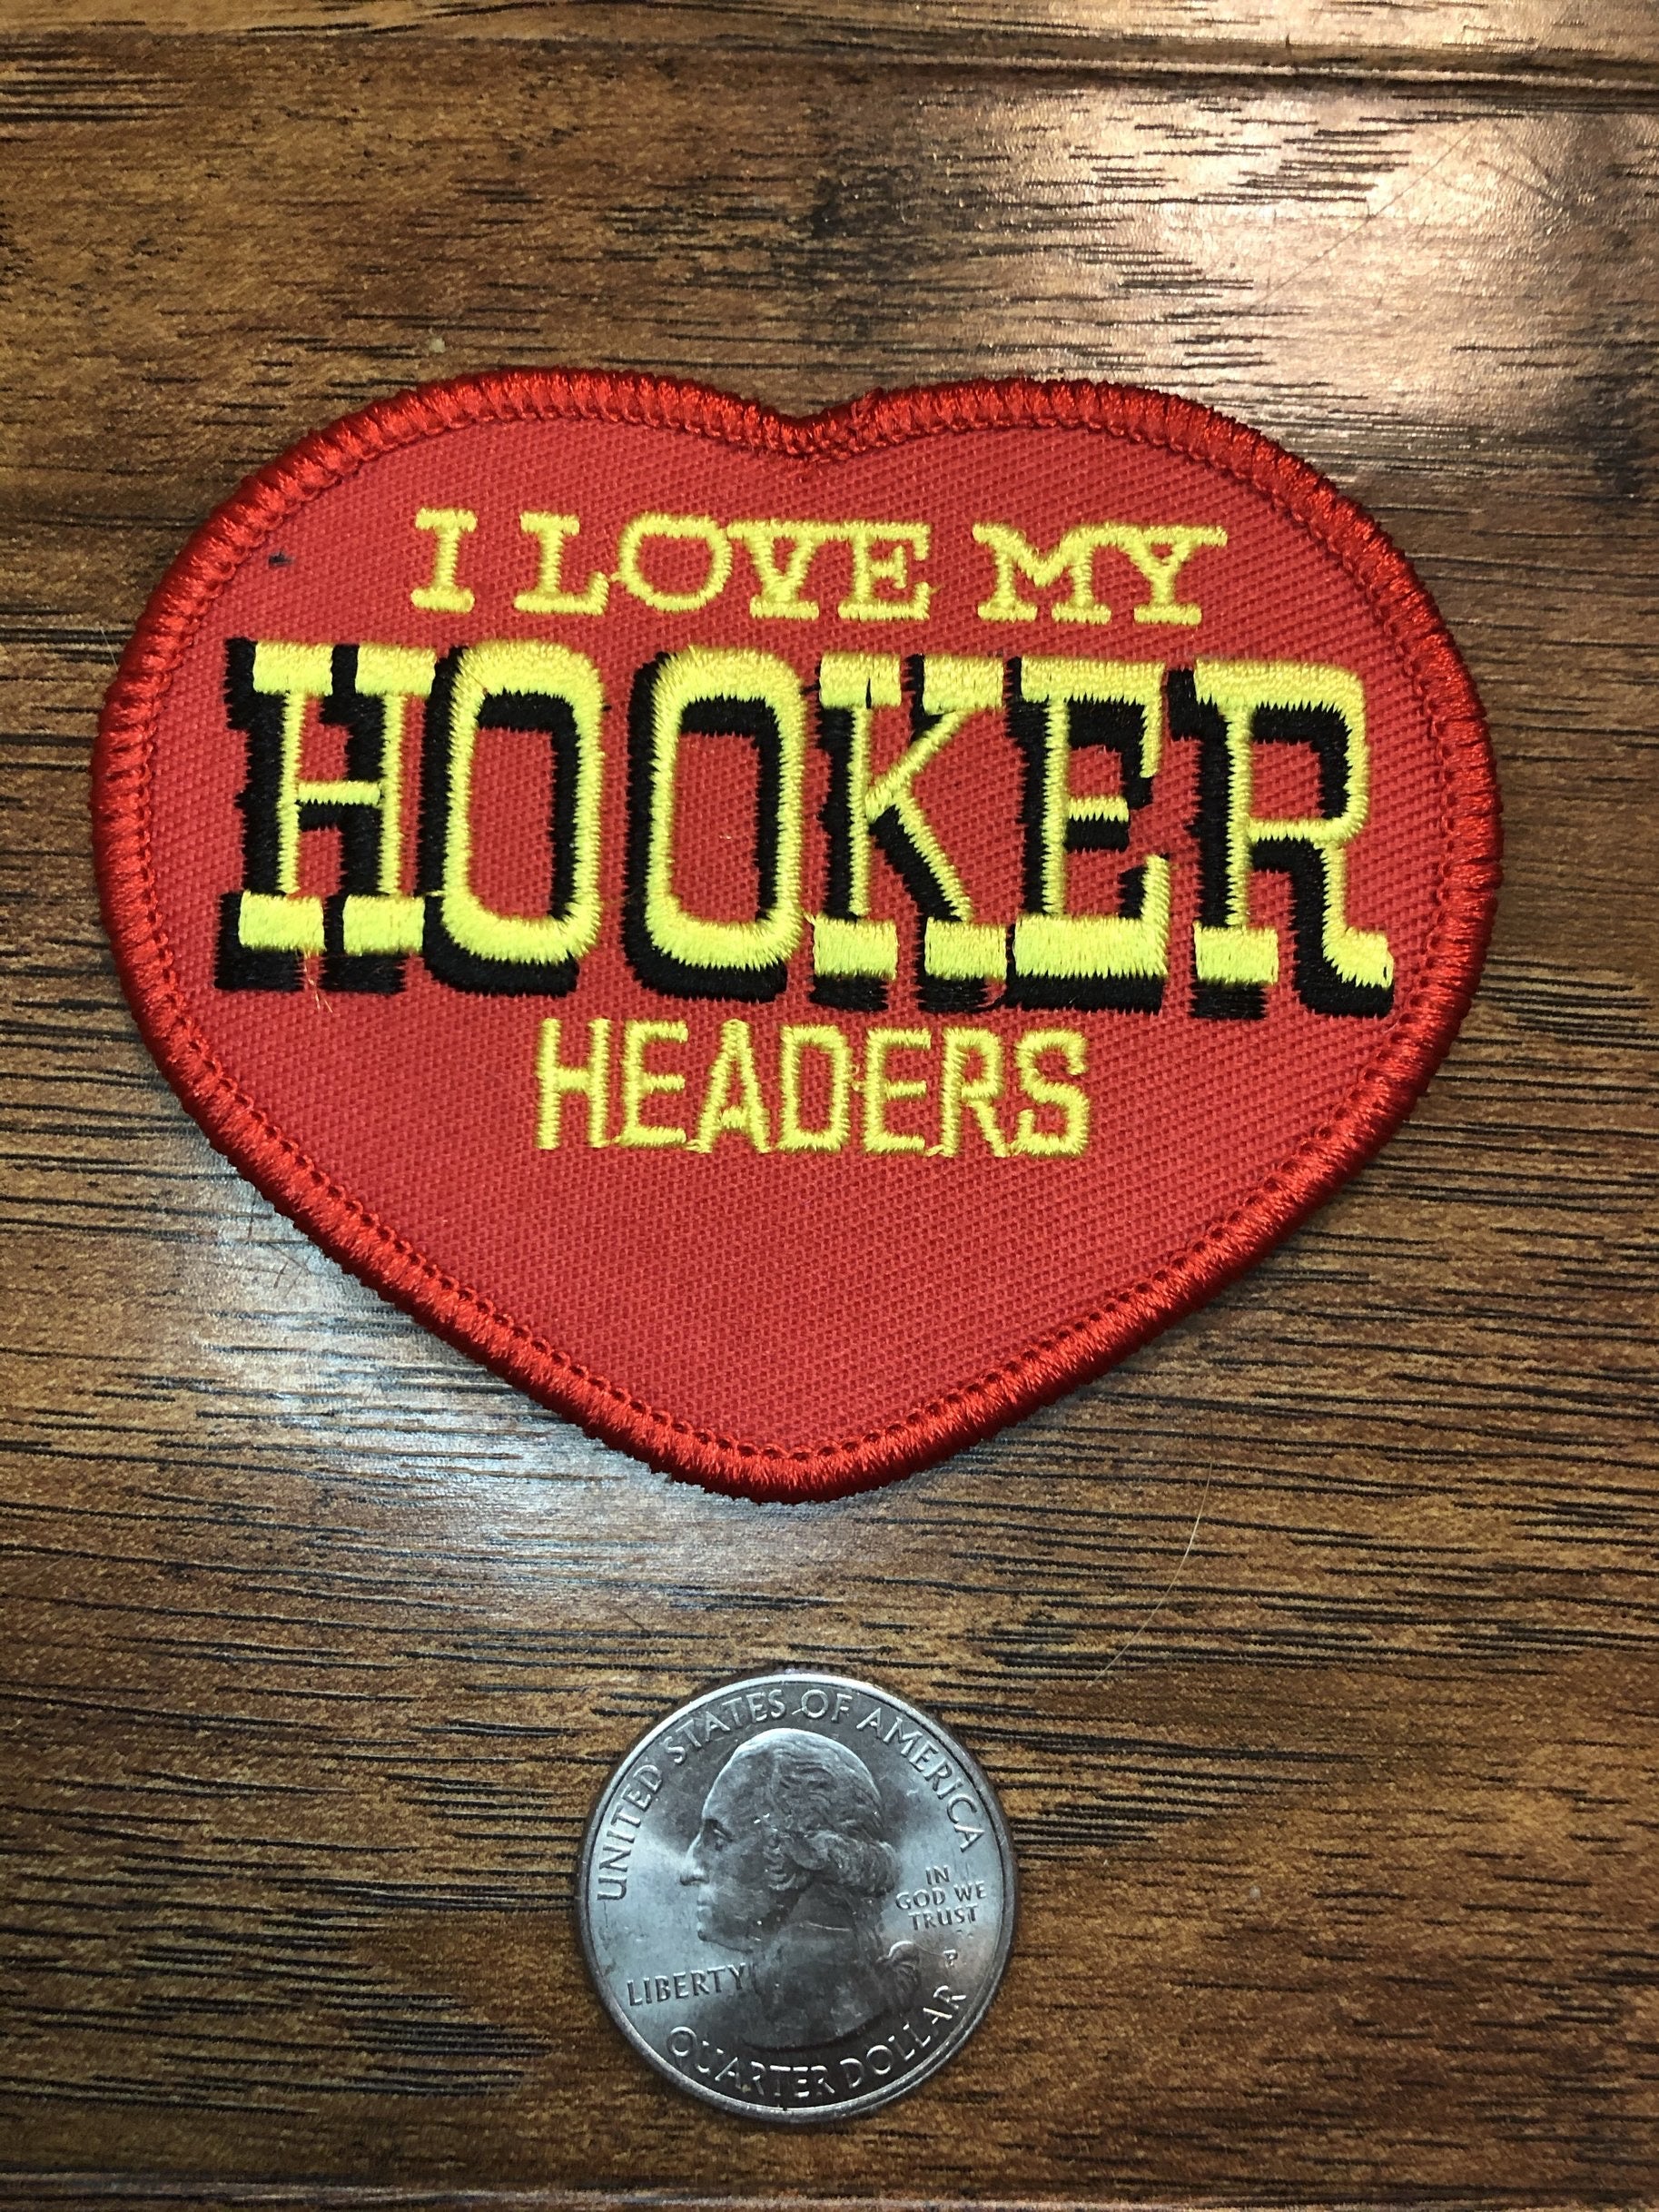 I Love My Hooker Headers